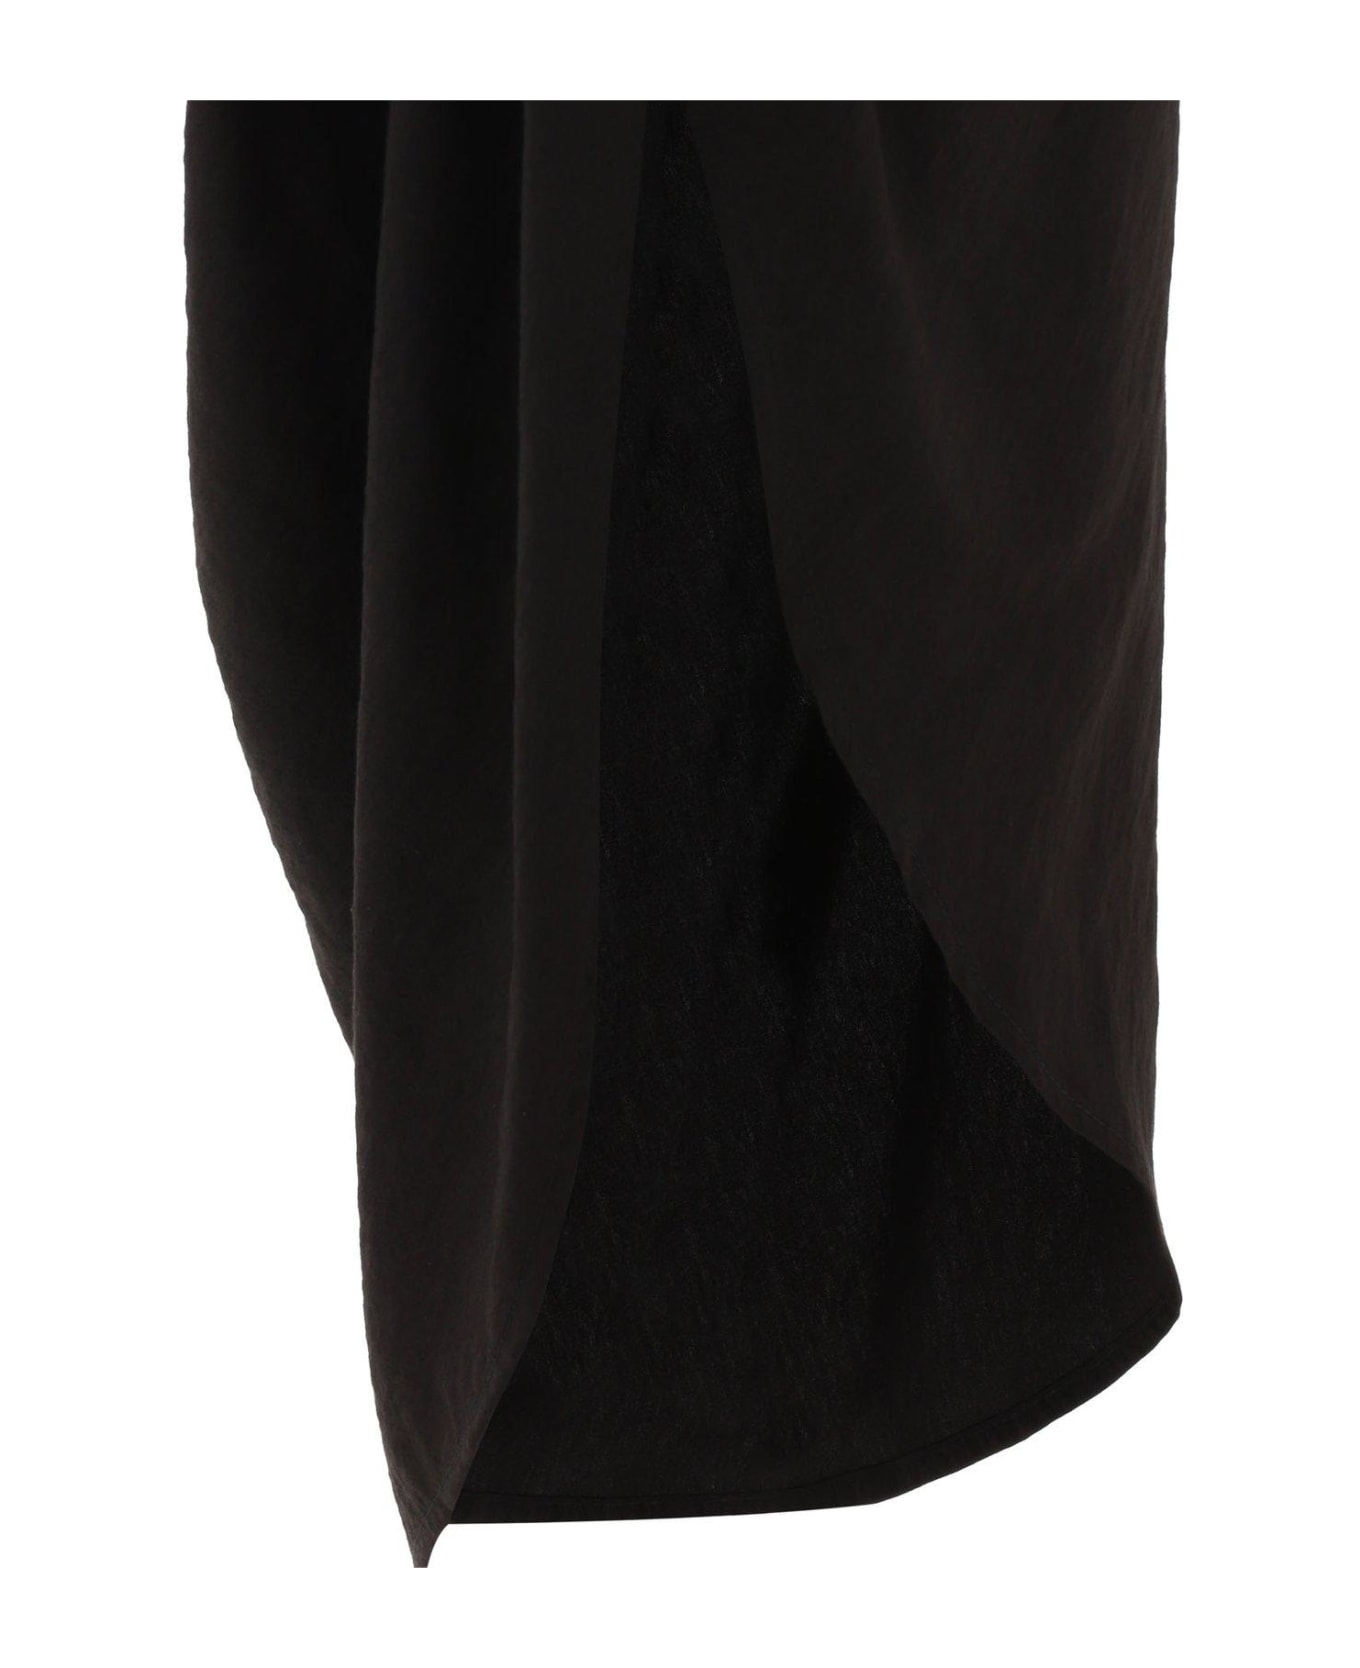 Jacquemus La Jupe Saudade Draped Skirt - Black スカート